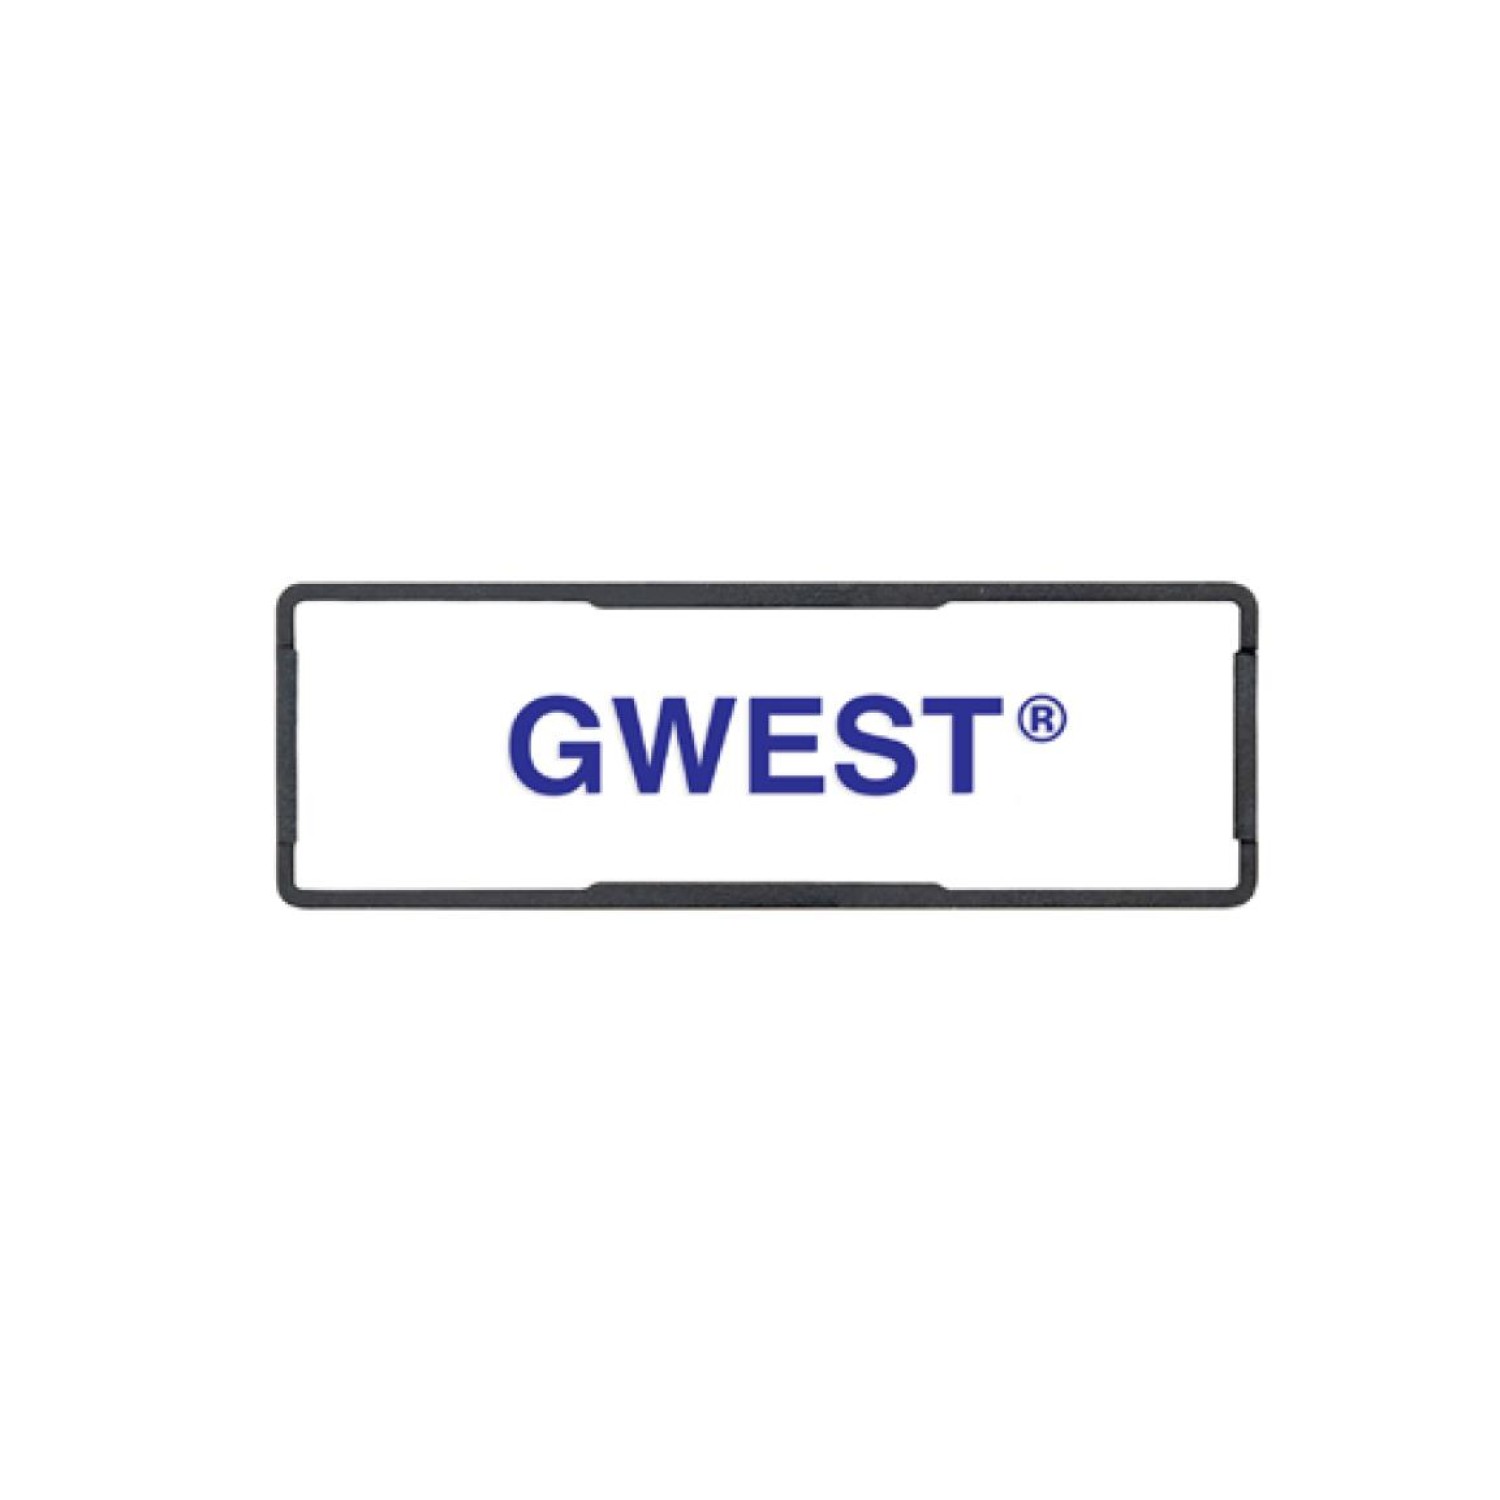 Gwest Pano Etiketi - GPET 1 - 100 Adet